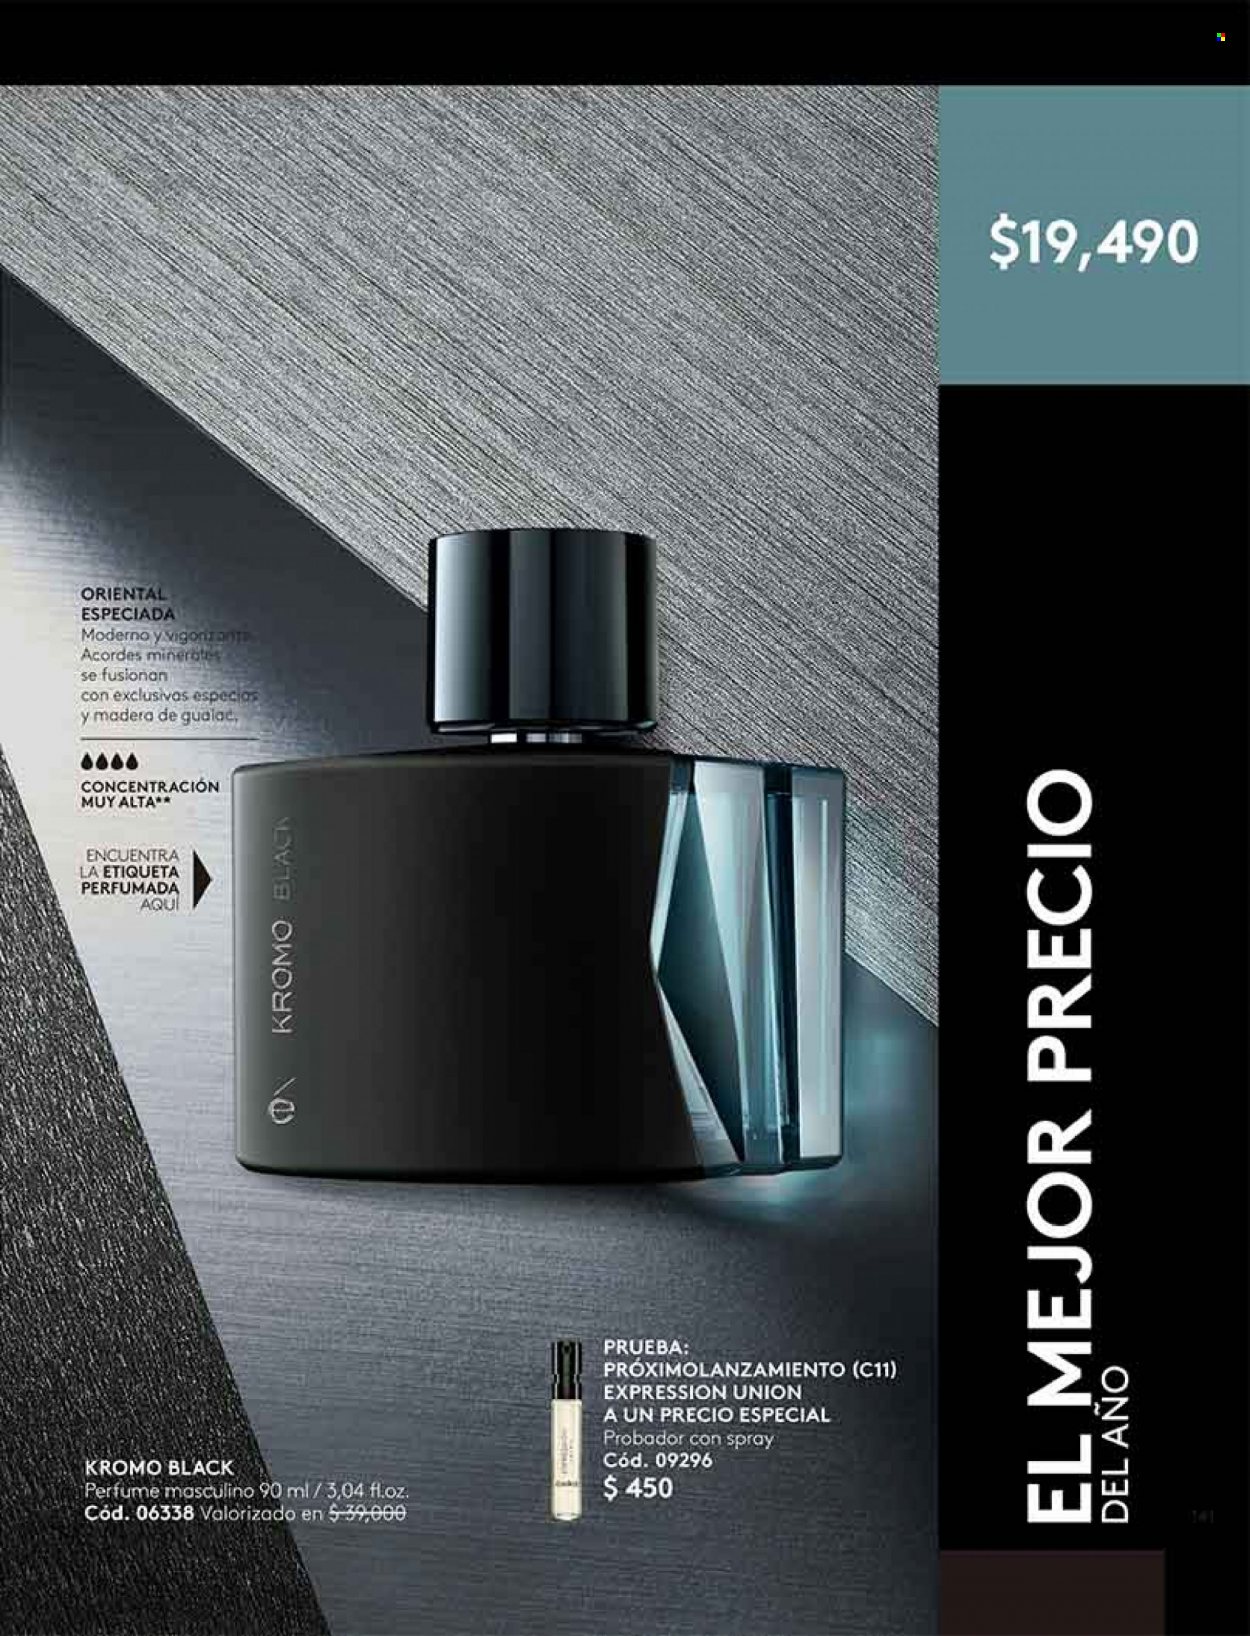 Catálogo Ésika - Ventas - perfume. Página 145.